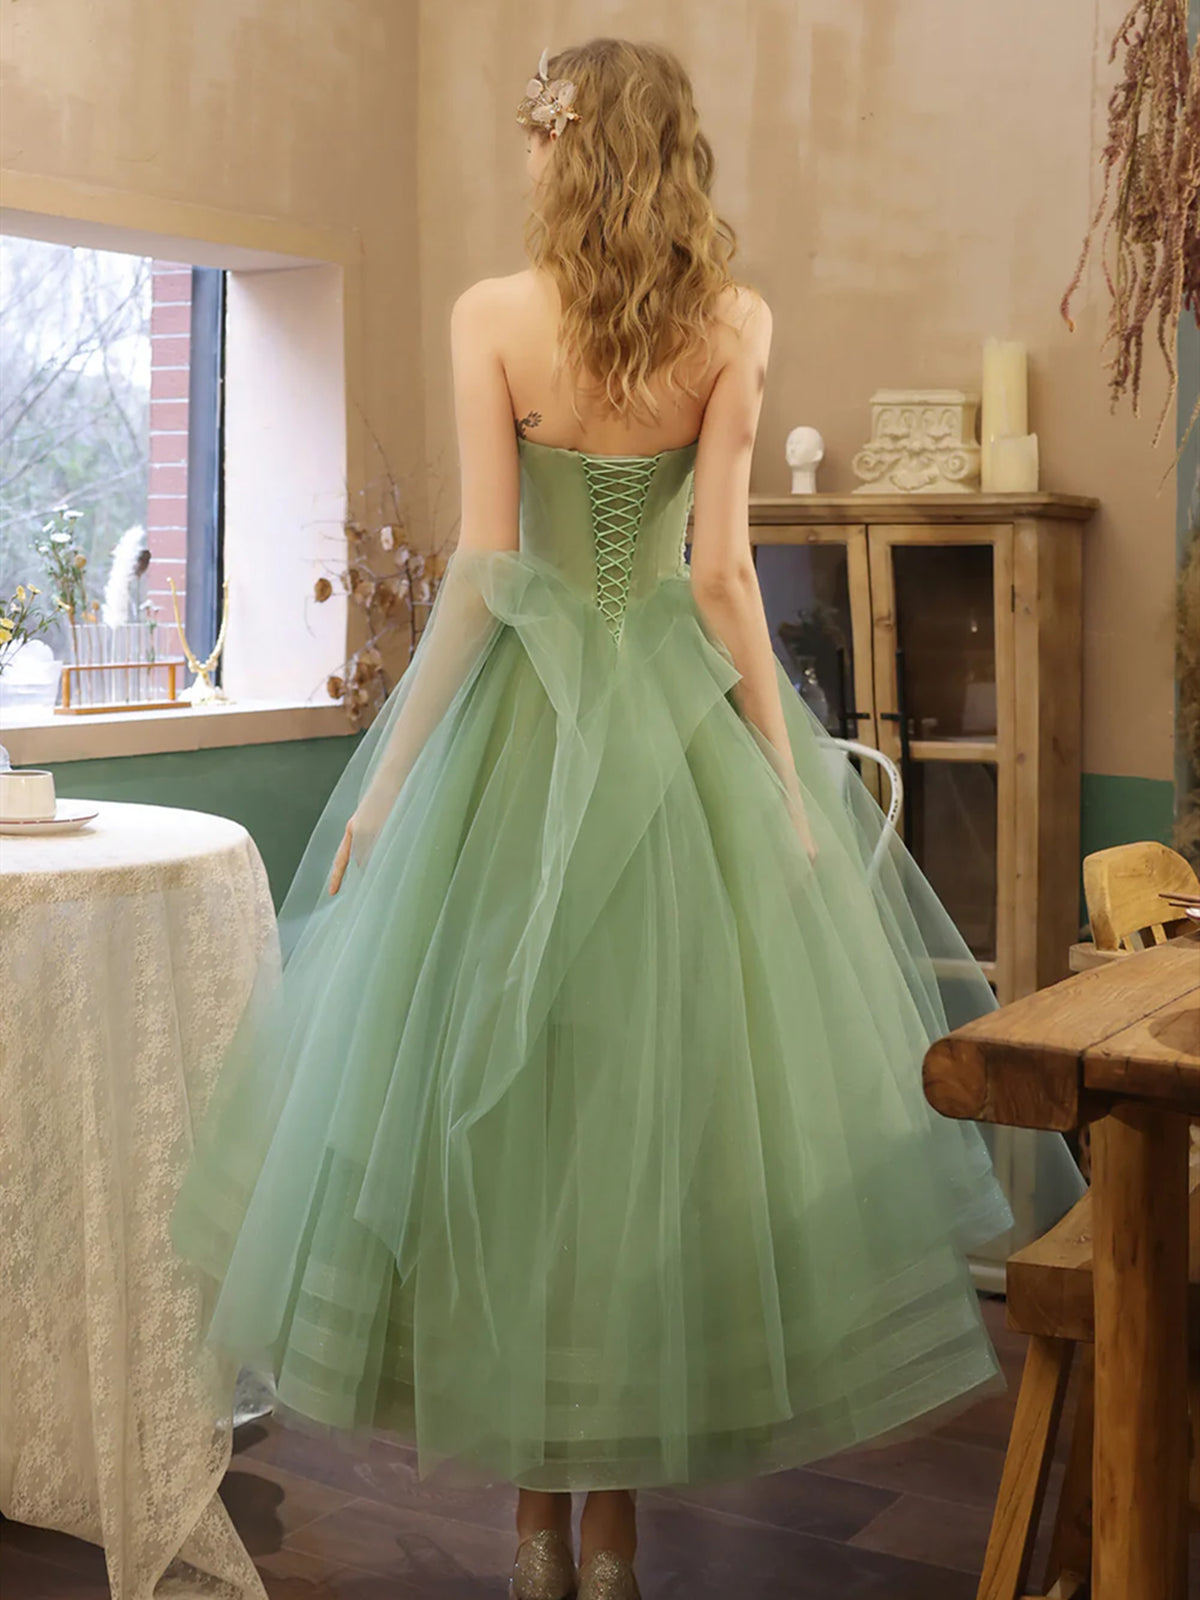 Strapless Green Tea Length Prom Dresses, Green Tea Length Formal Homecoming Dresses